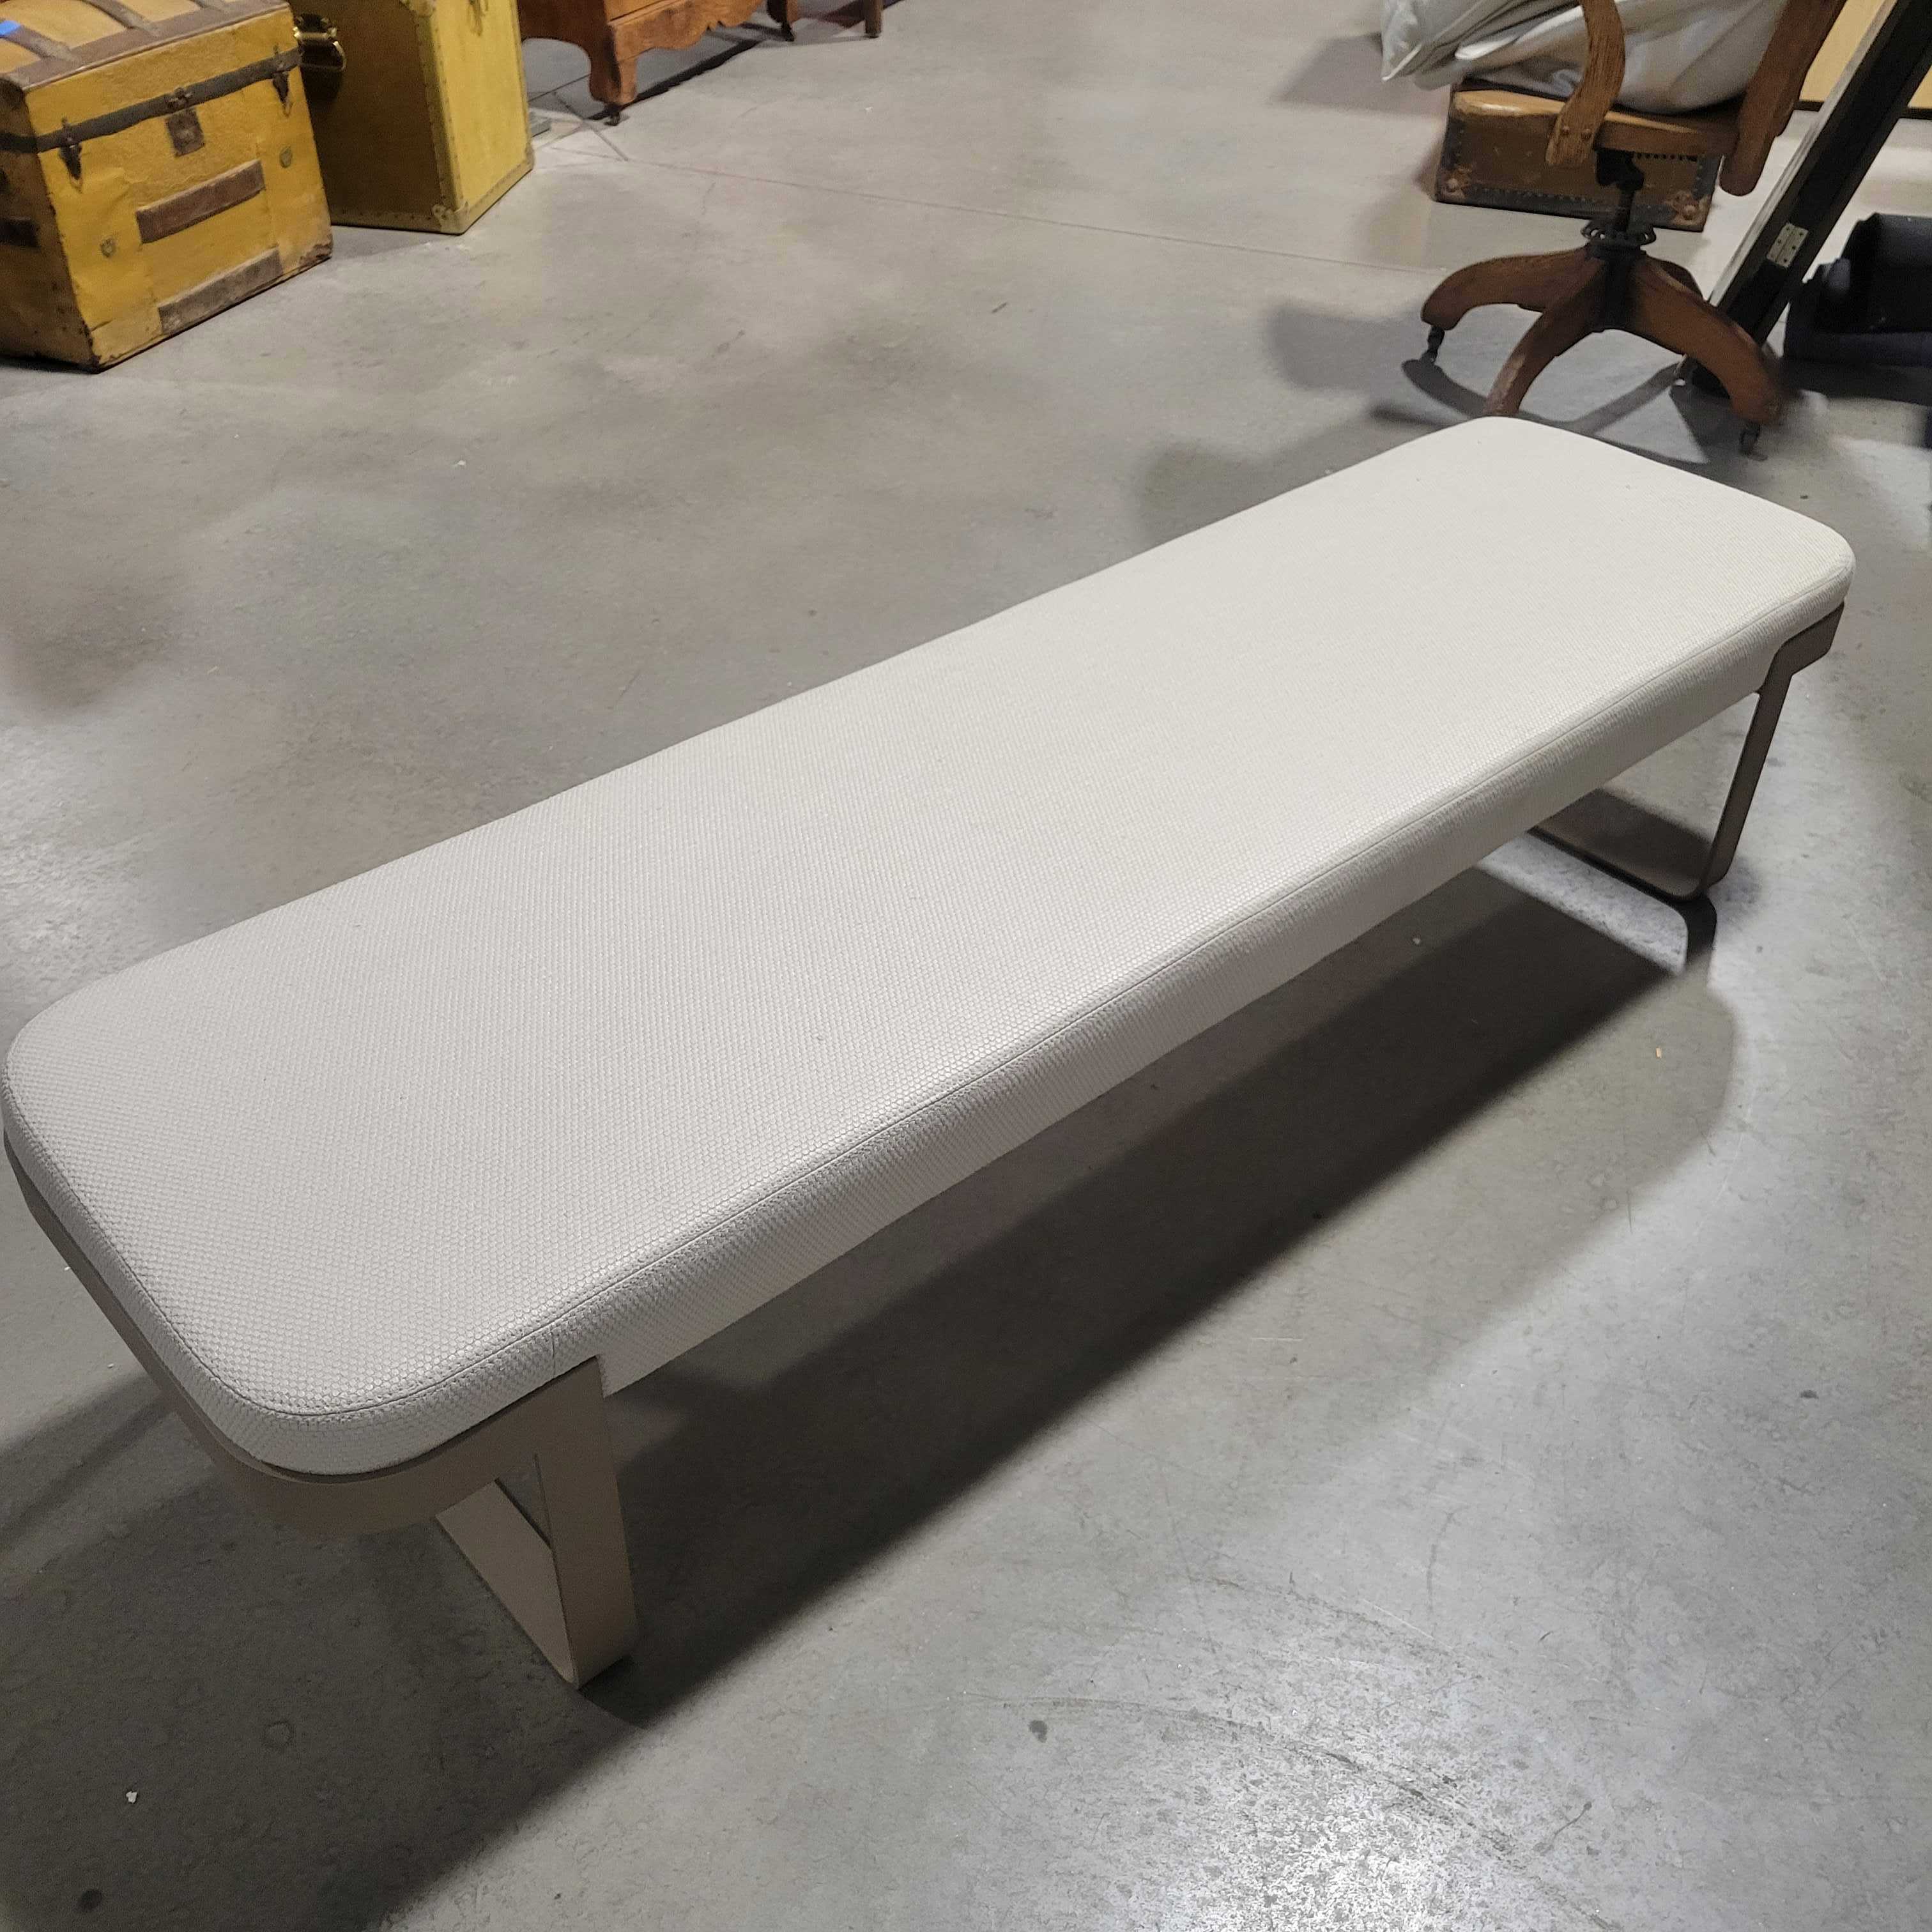 71"x 20"x 15" Poltrona Modern Light Grey and Ivory Metal Base Bench